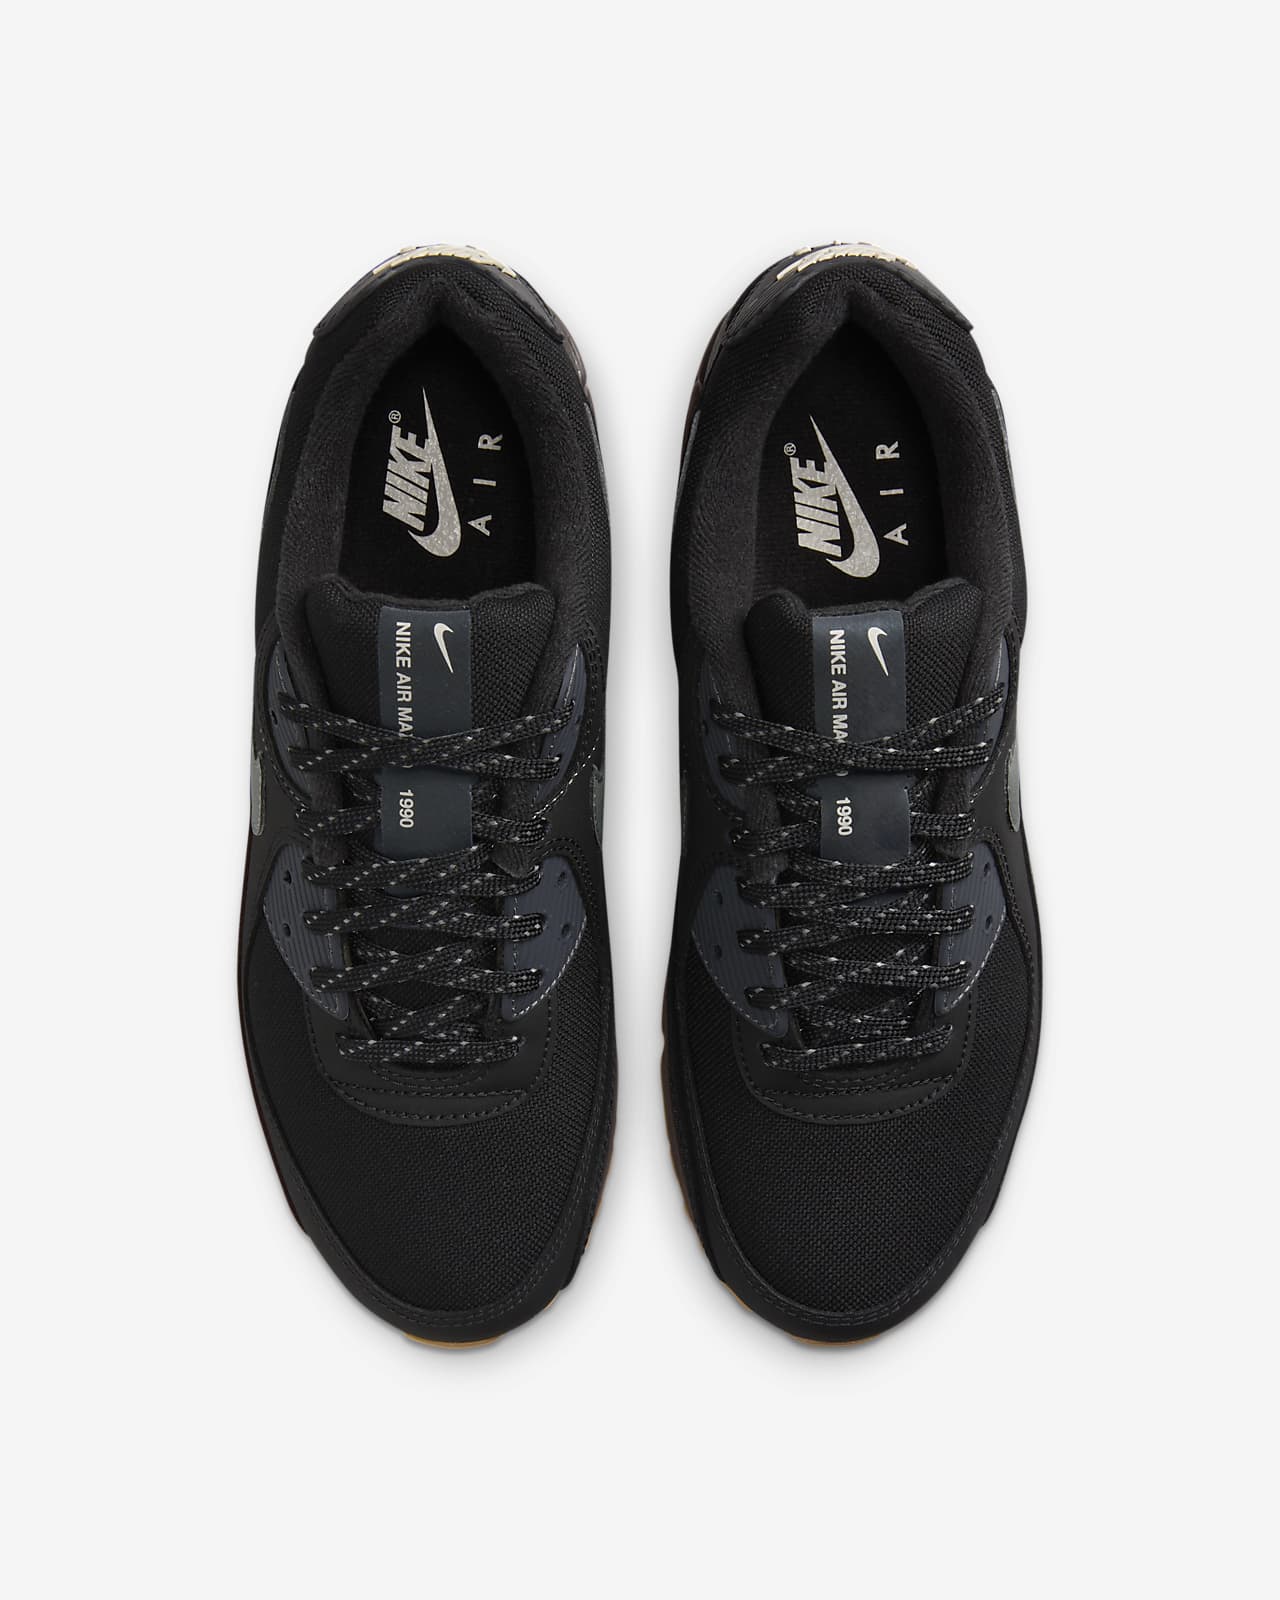 Nike Air Max 90 Essential Black and White